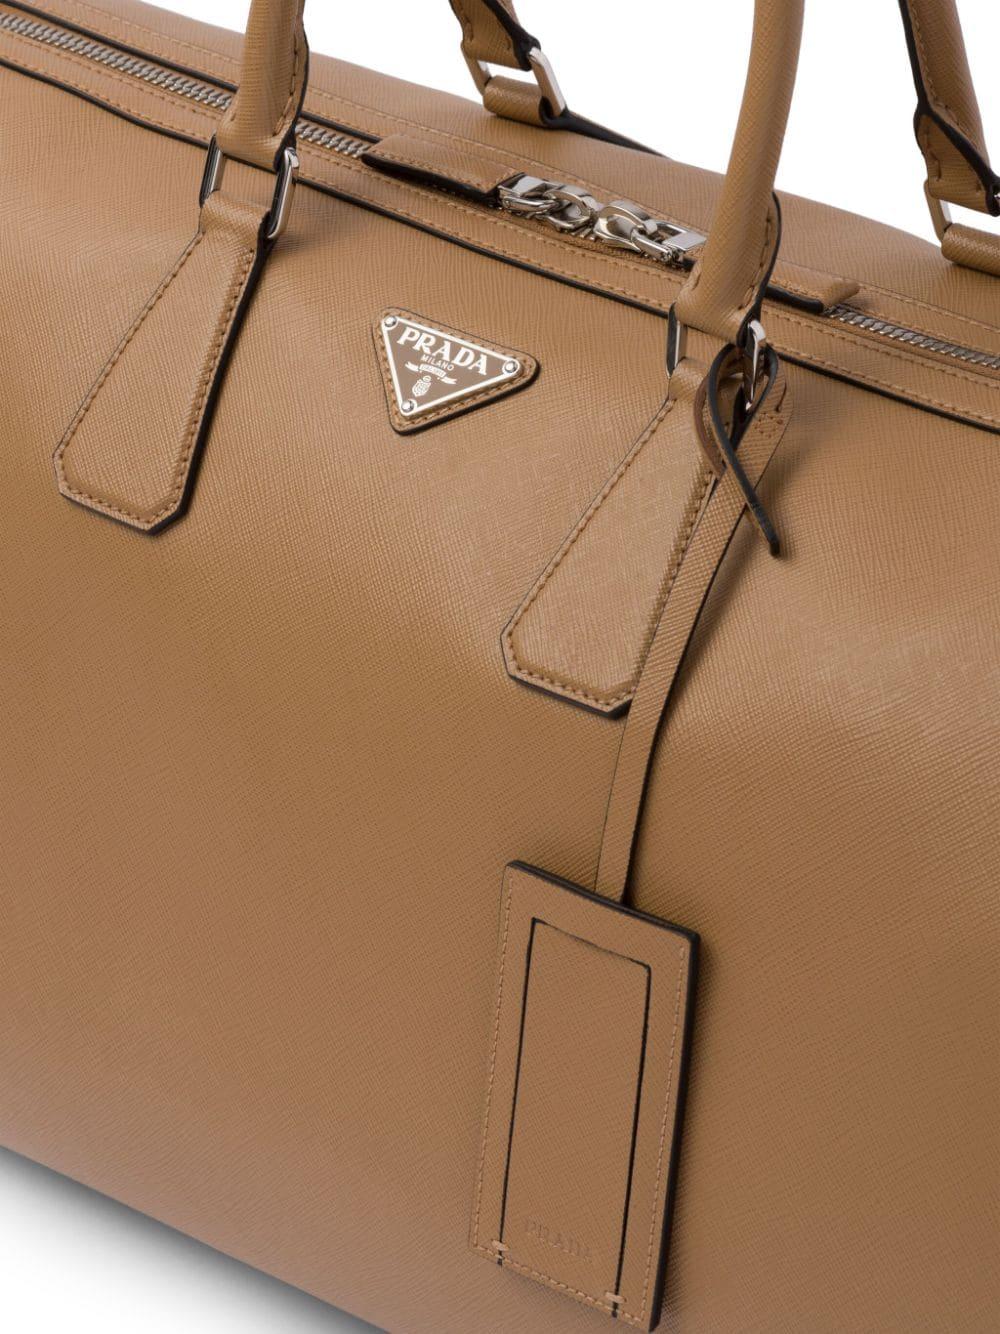 Prada triangle-logo Saffiano-leather Tote Bag - Farfetch